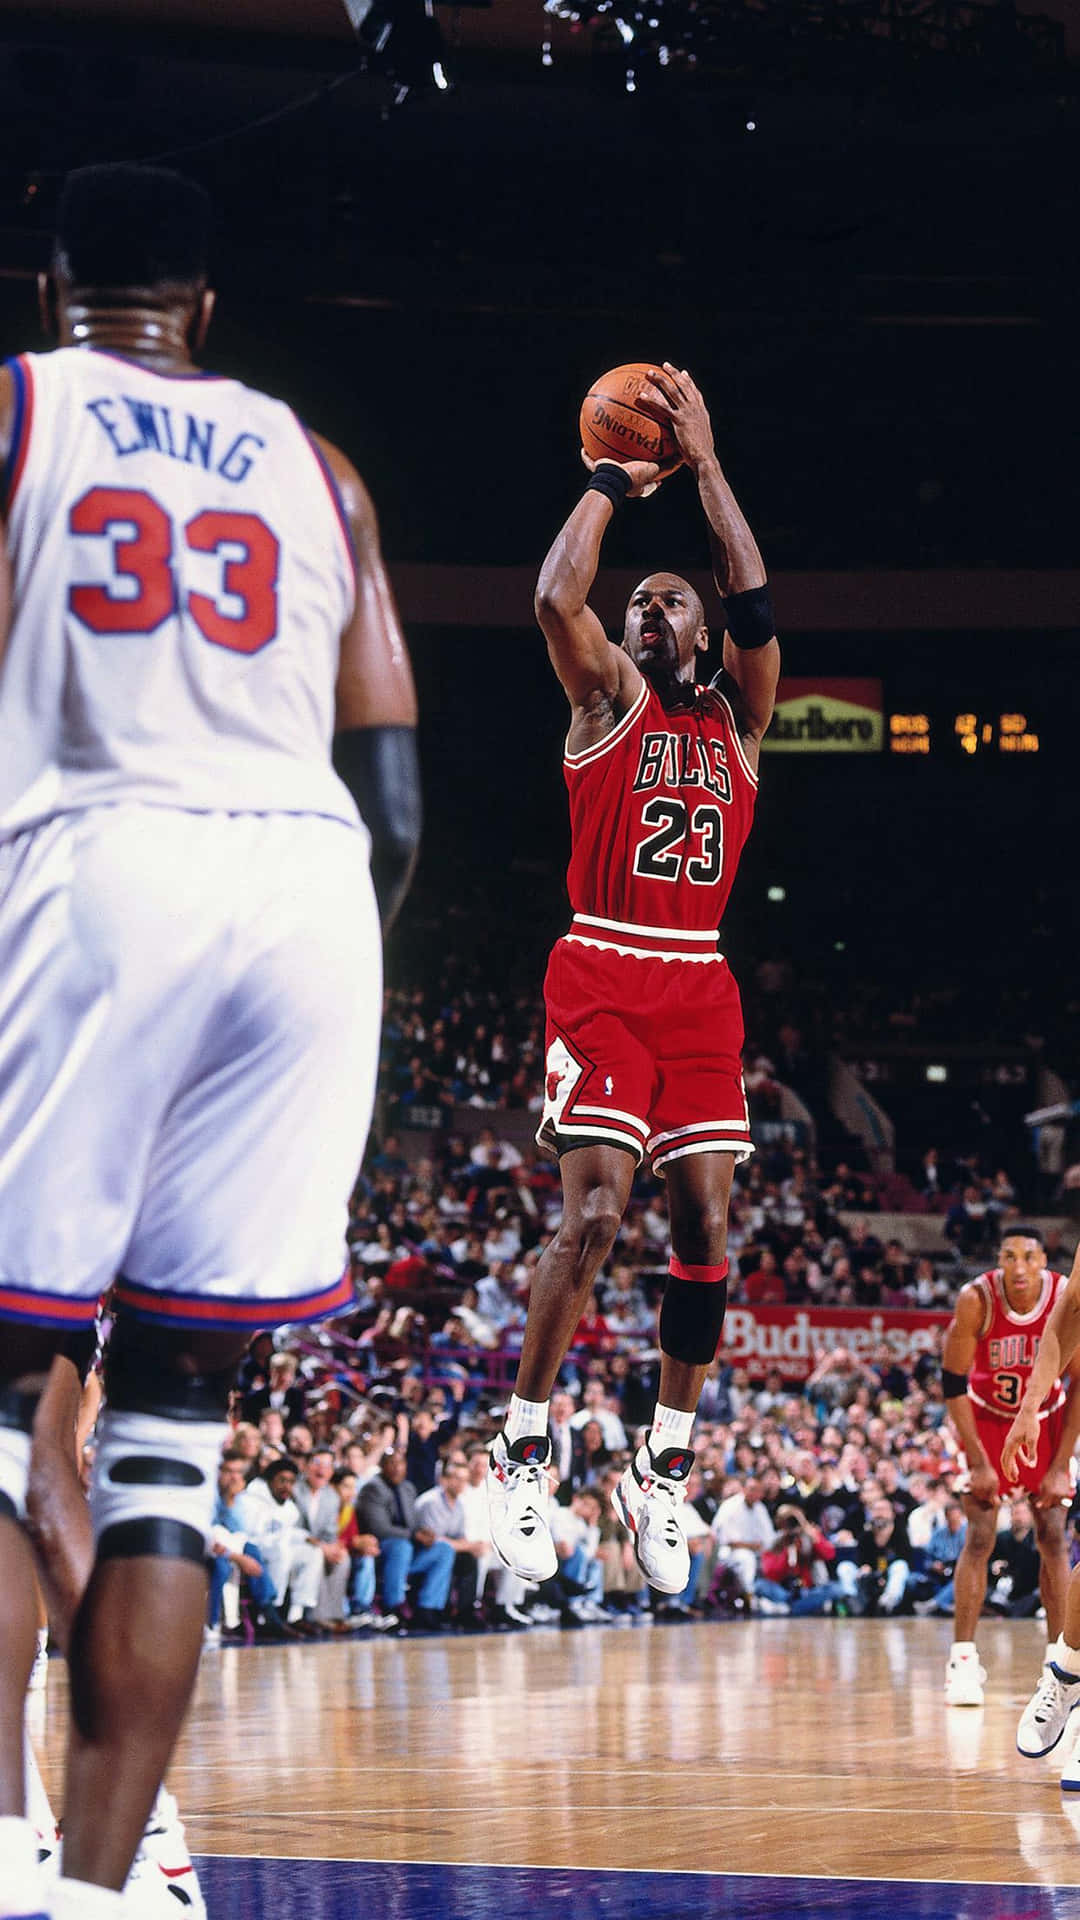 Michael Jordan with his iconic Iphone Wallpaper